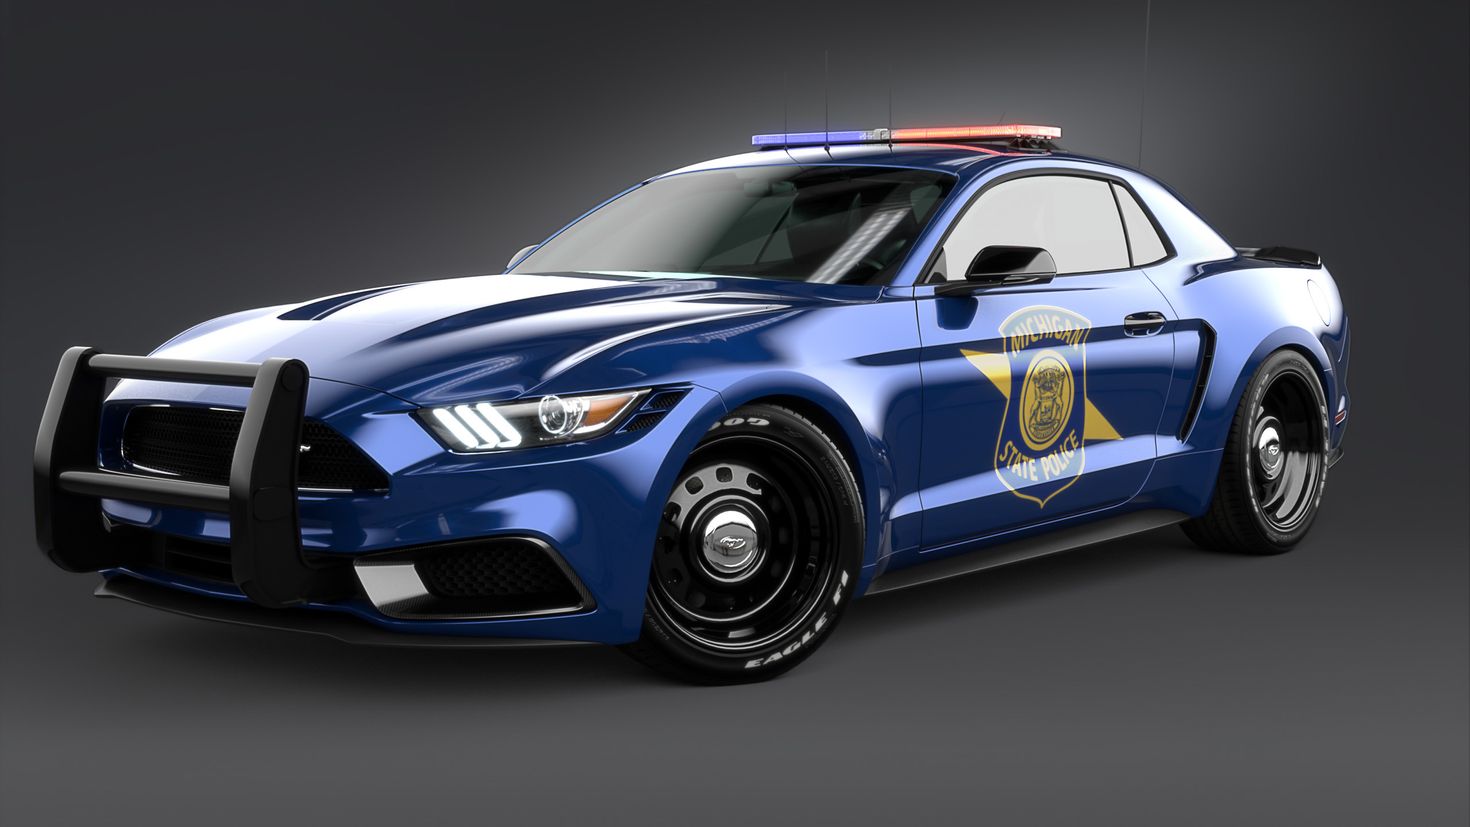 Синяя полицейская машина. Форд Мустанг Баррикейд 2018. Форд Мустанг 2017 полиция. Полицейский Форд Мустанг Баррикейд. Ford Mustang 2016 Police.